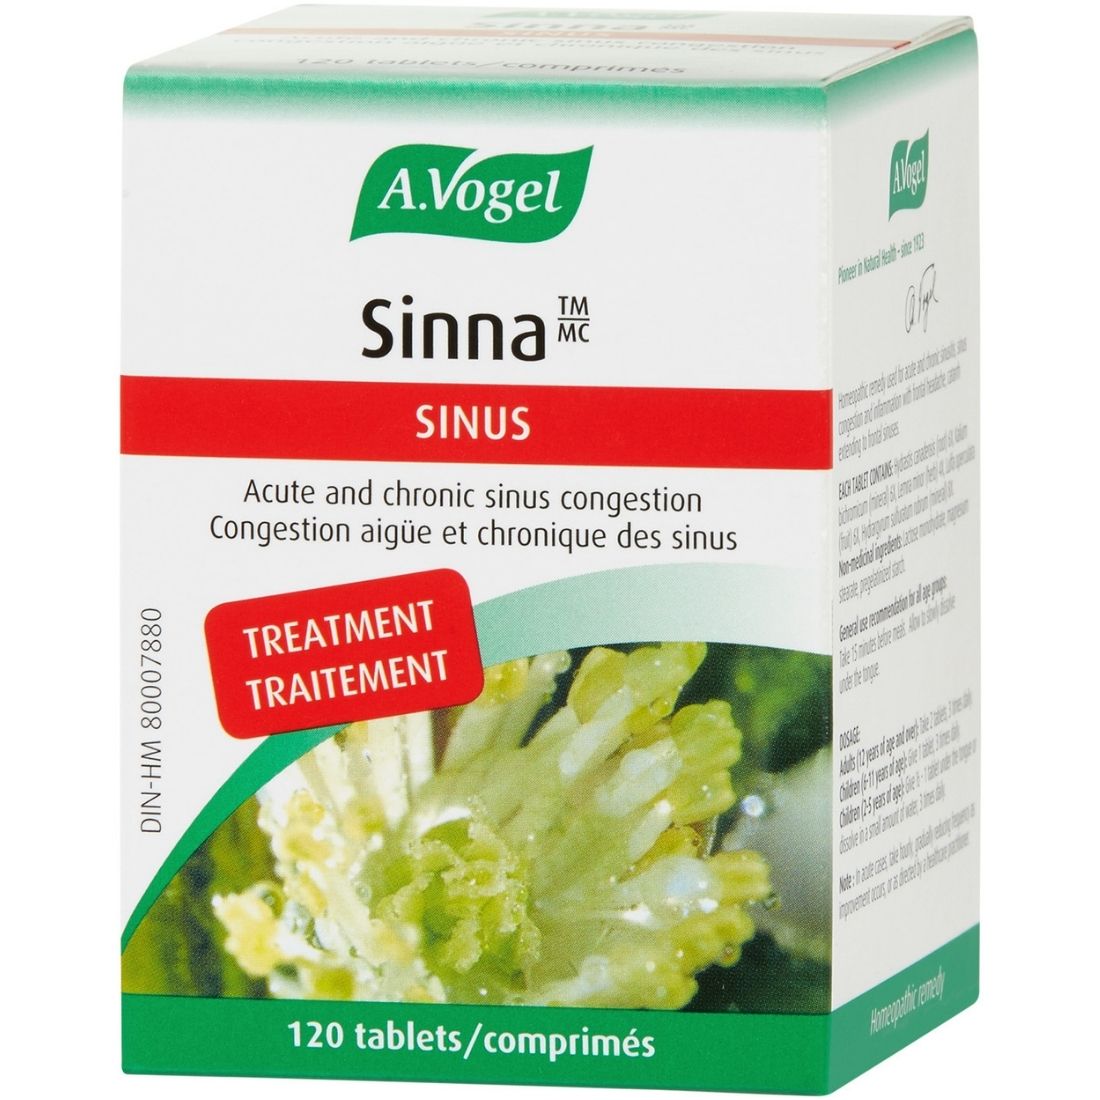 A. Vogel Sinna Tablets, 120 Tablets